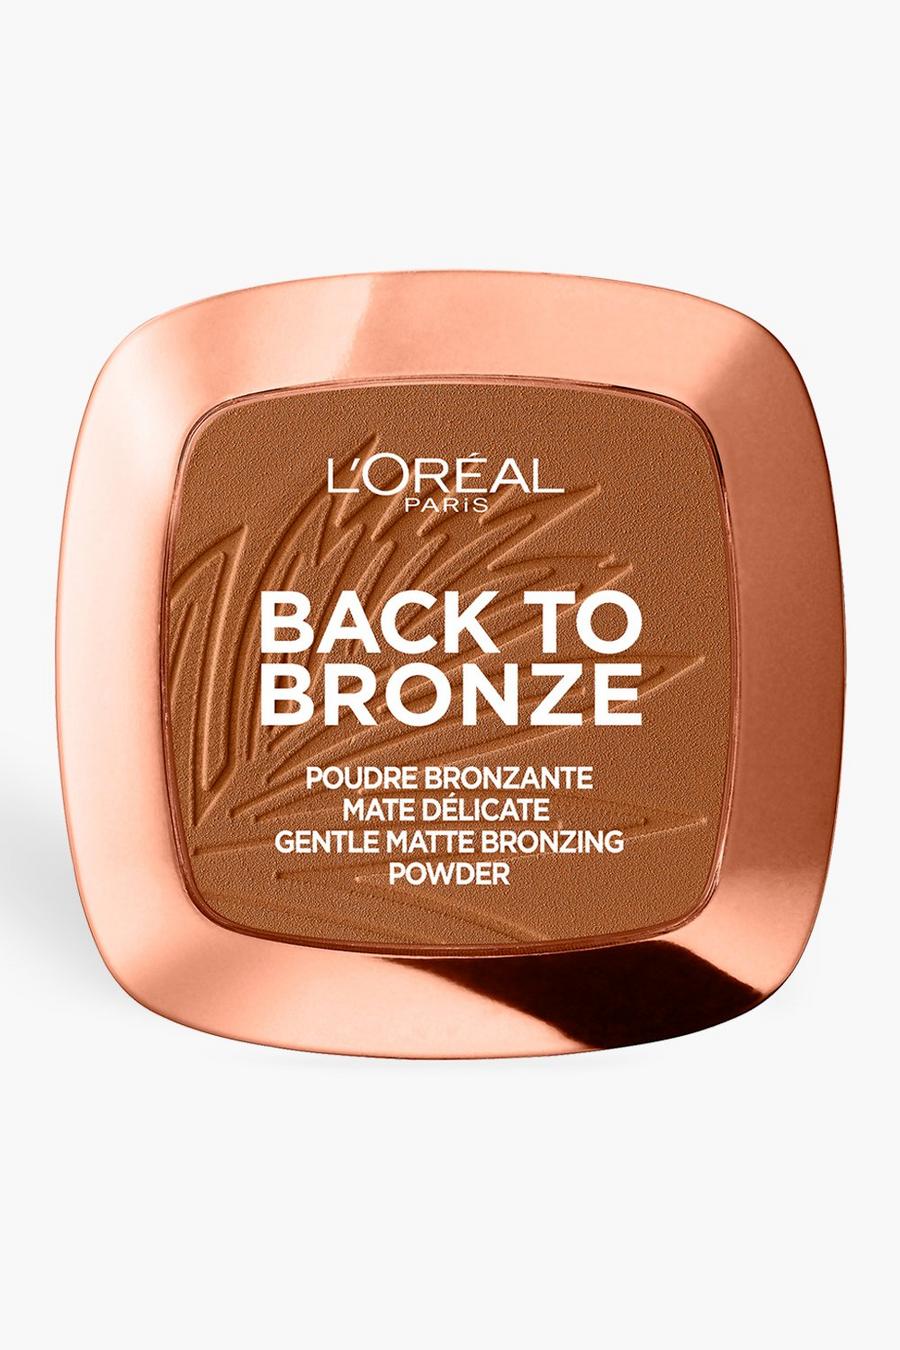 L'Oreal Paris Back To Bronze Matte Powder